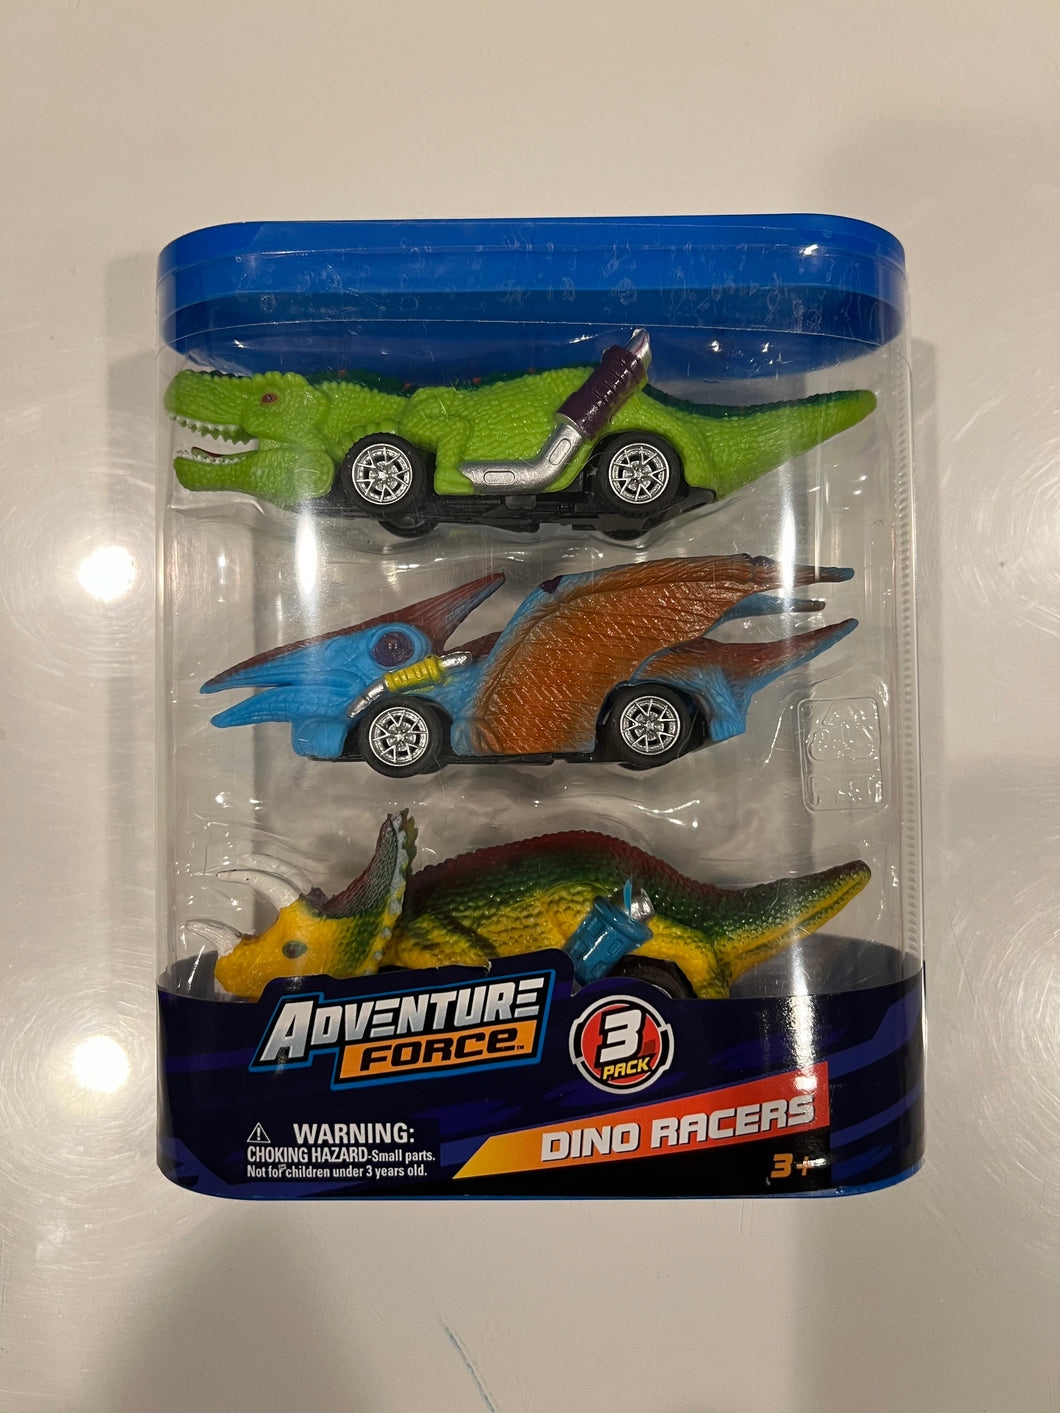 Adventure Force Dino Racers